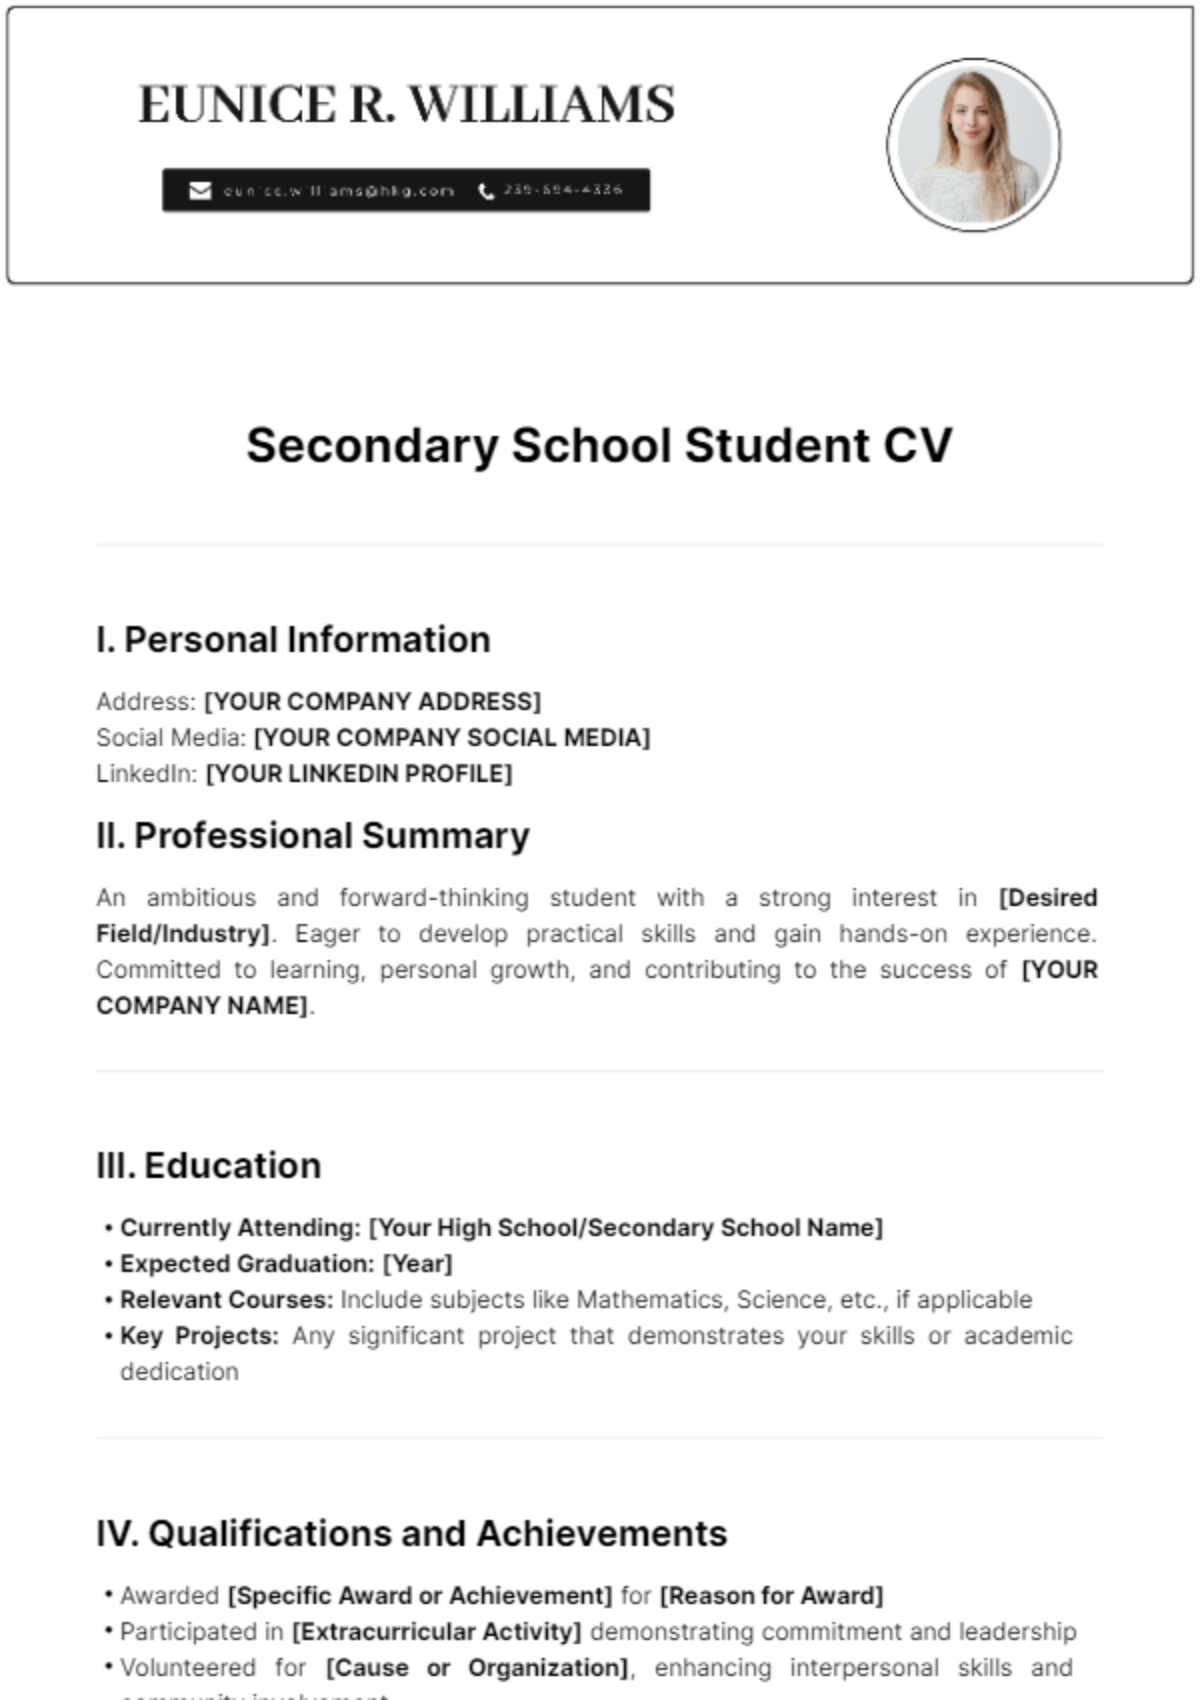 Free Secondary School Student CV Template